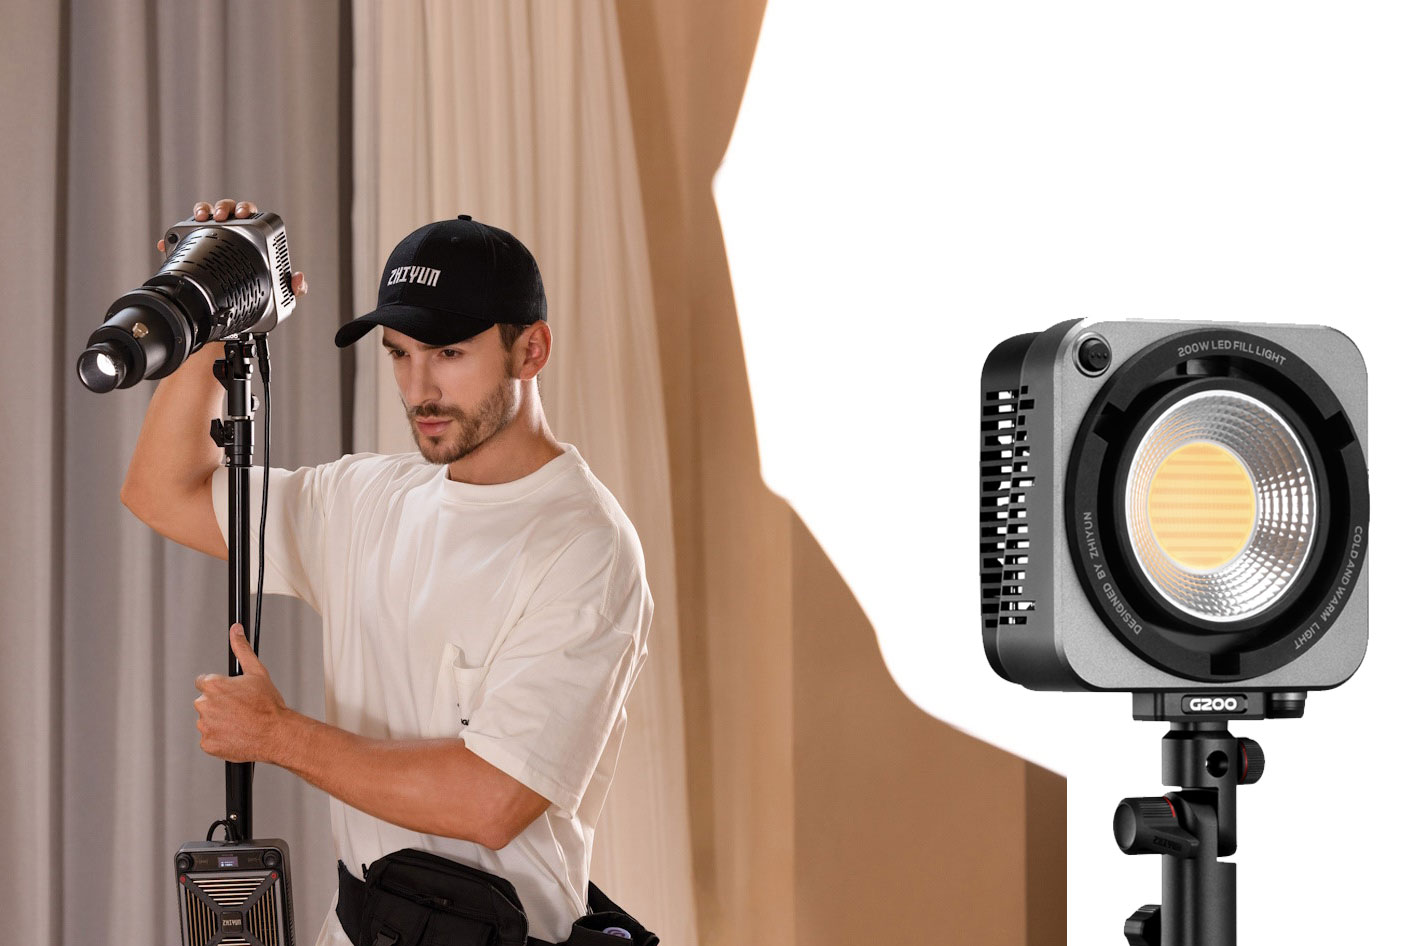 MOLUS G200 and FIVERAY V60: new lightweight filmmaking lights